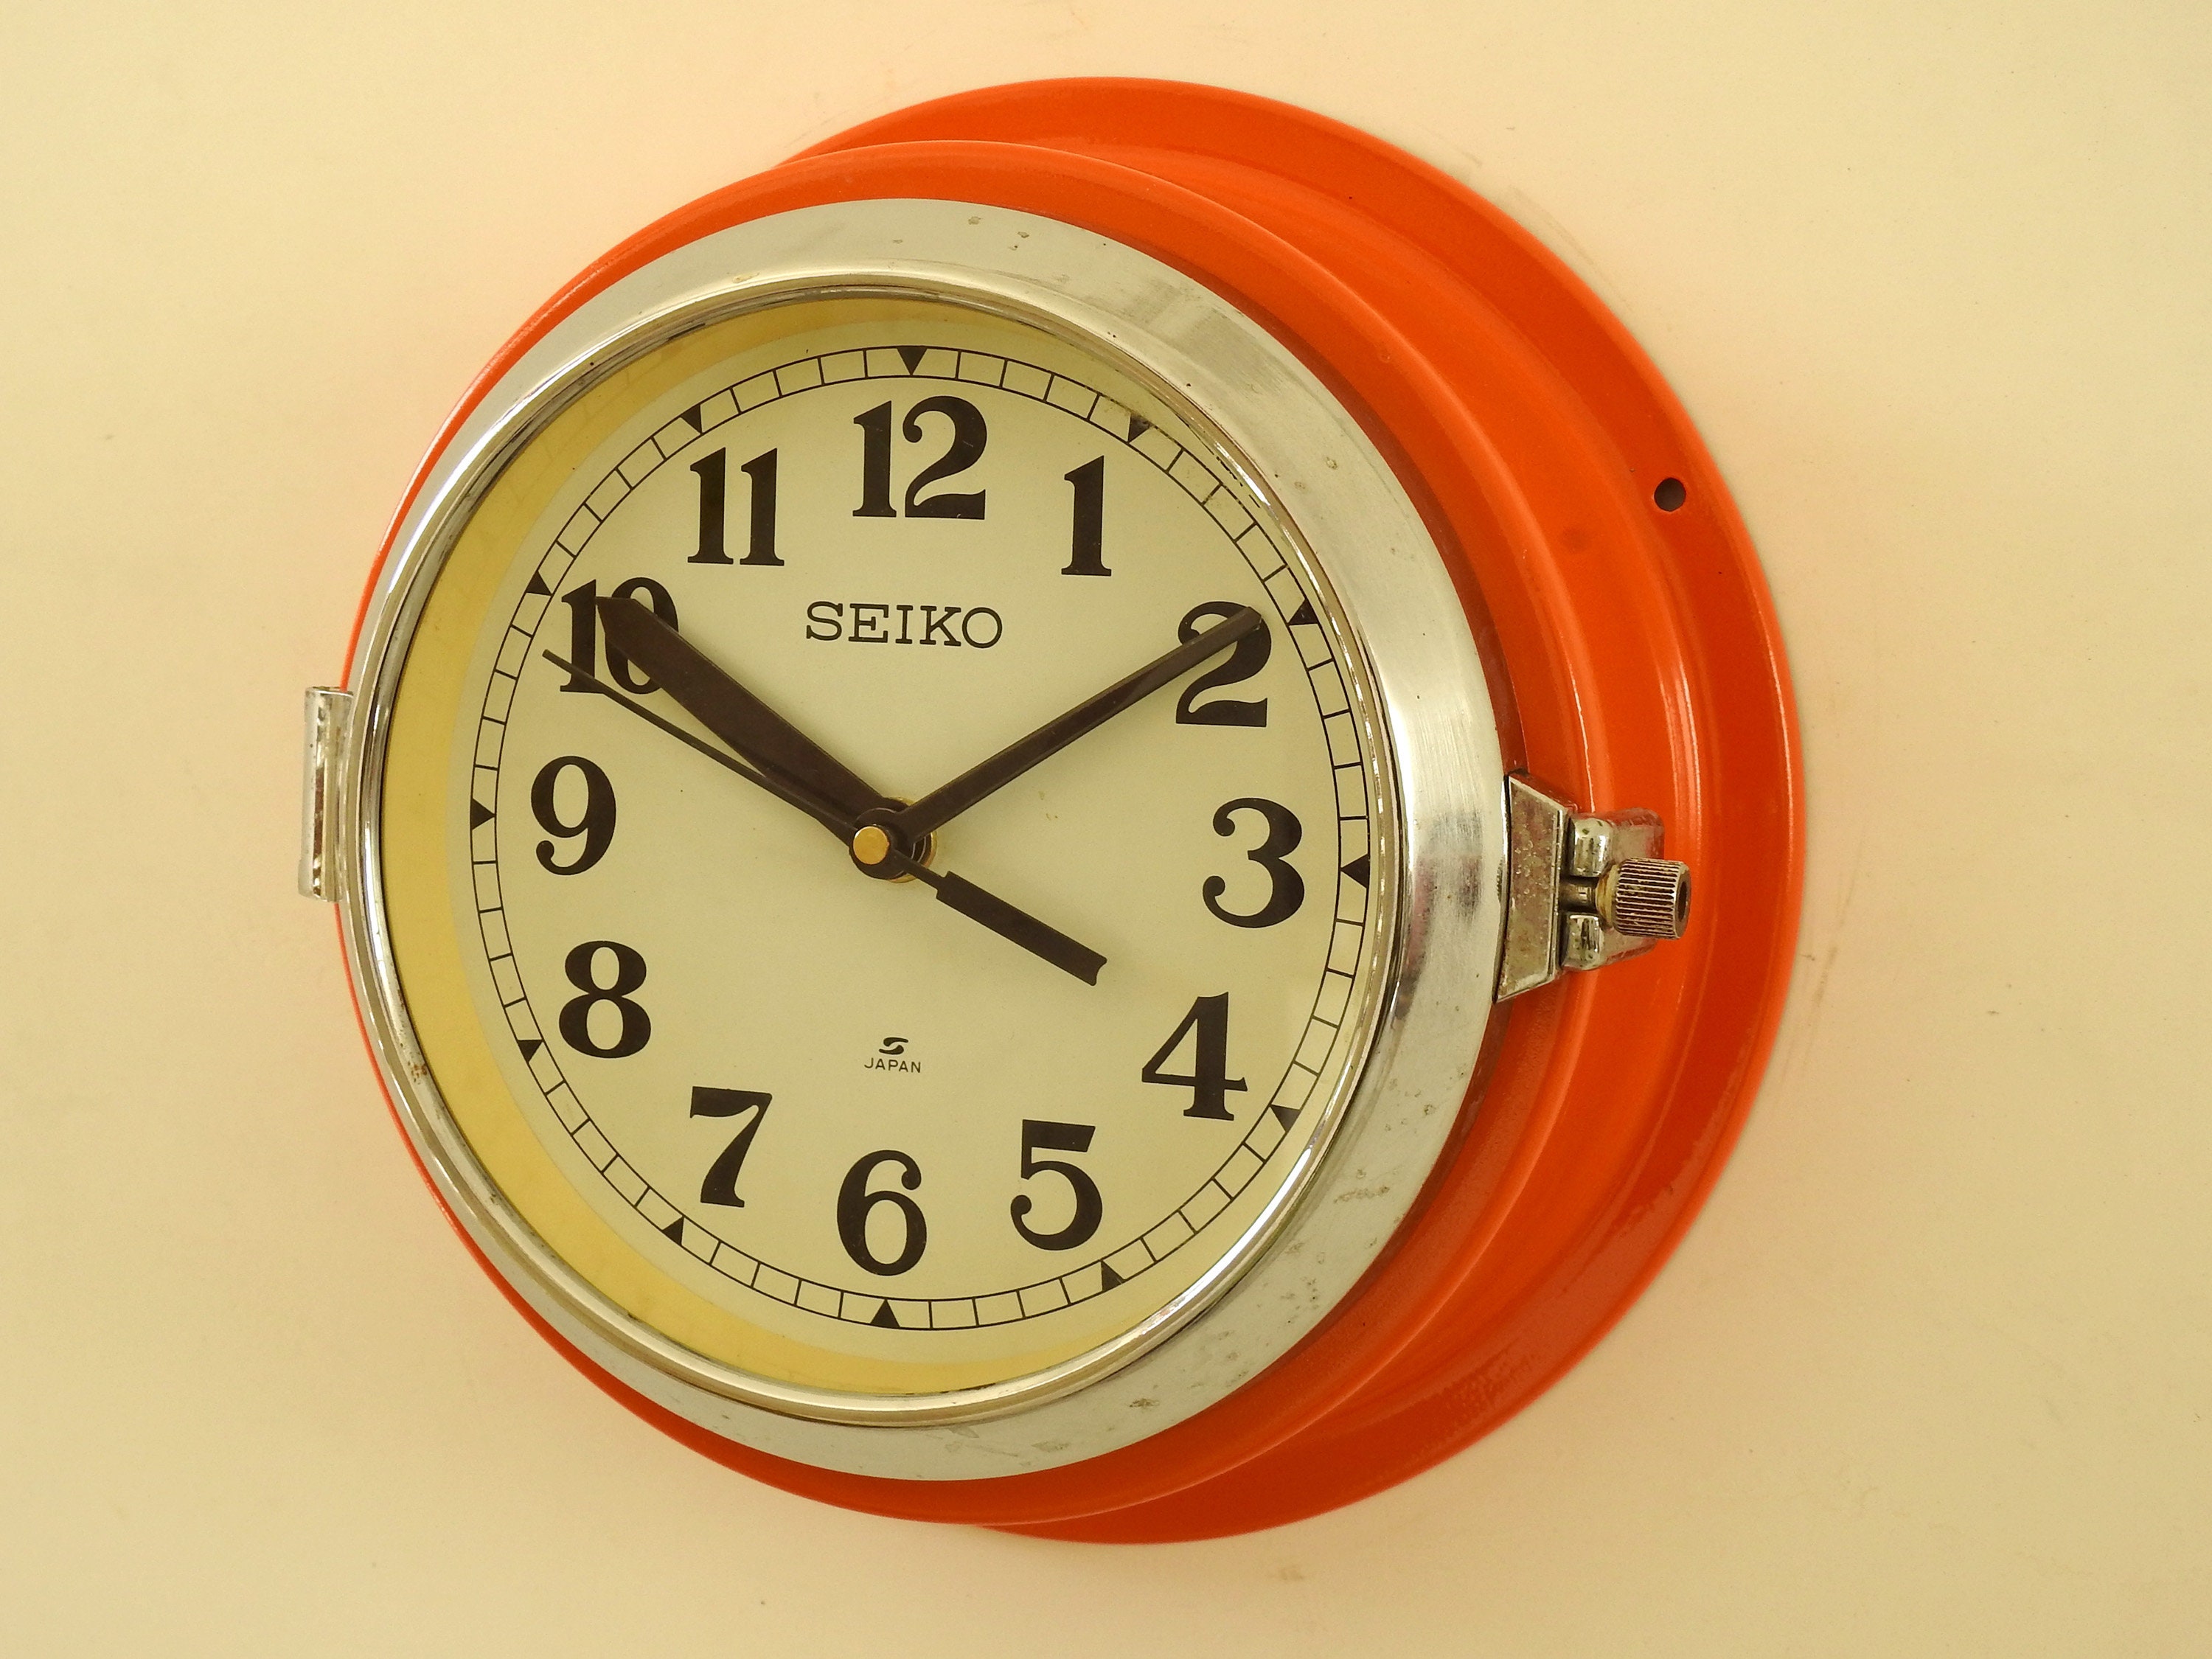 Buy Seiko Vintage Clock Online In India - Etsy India